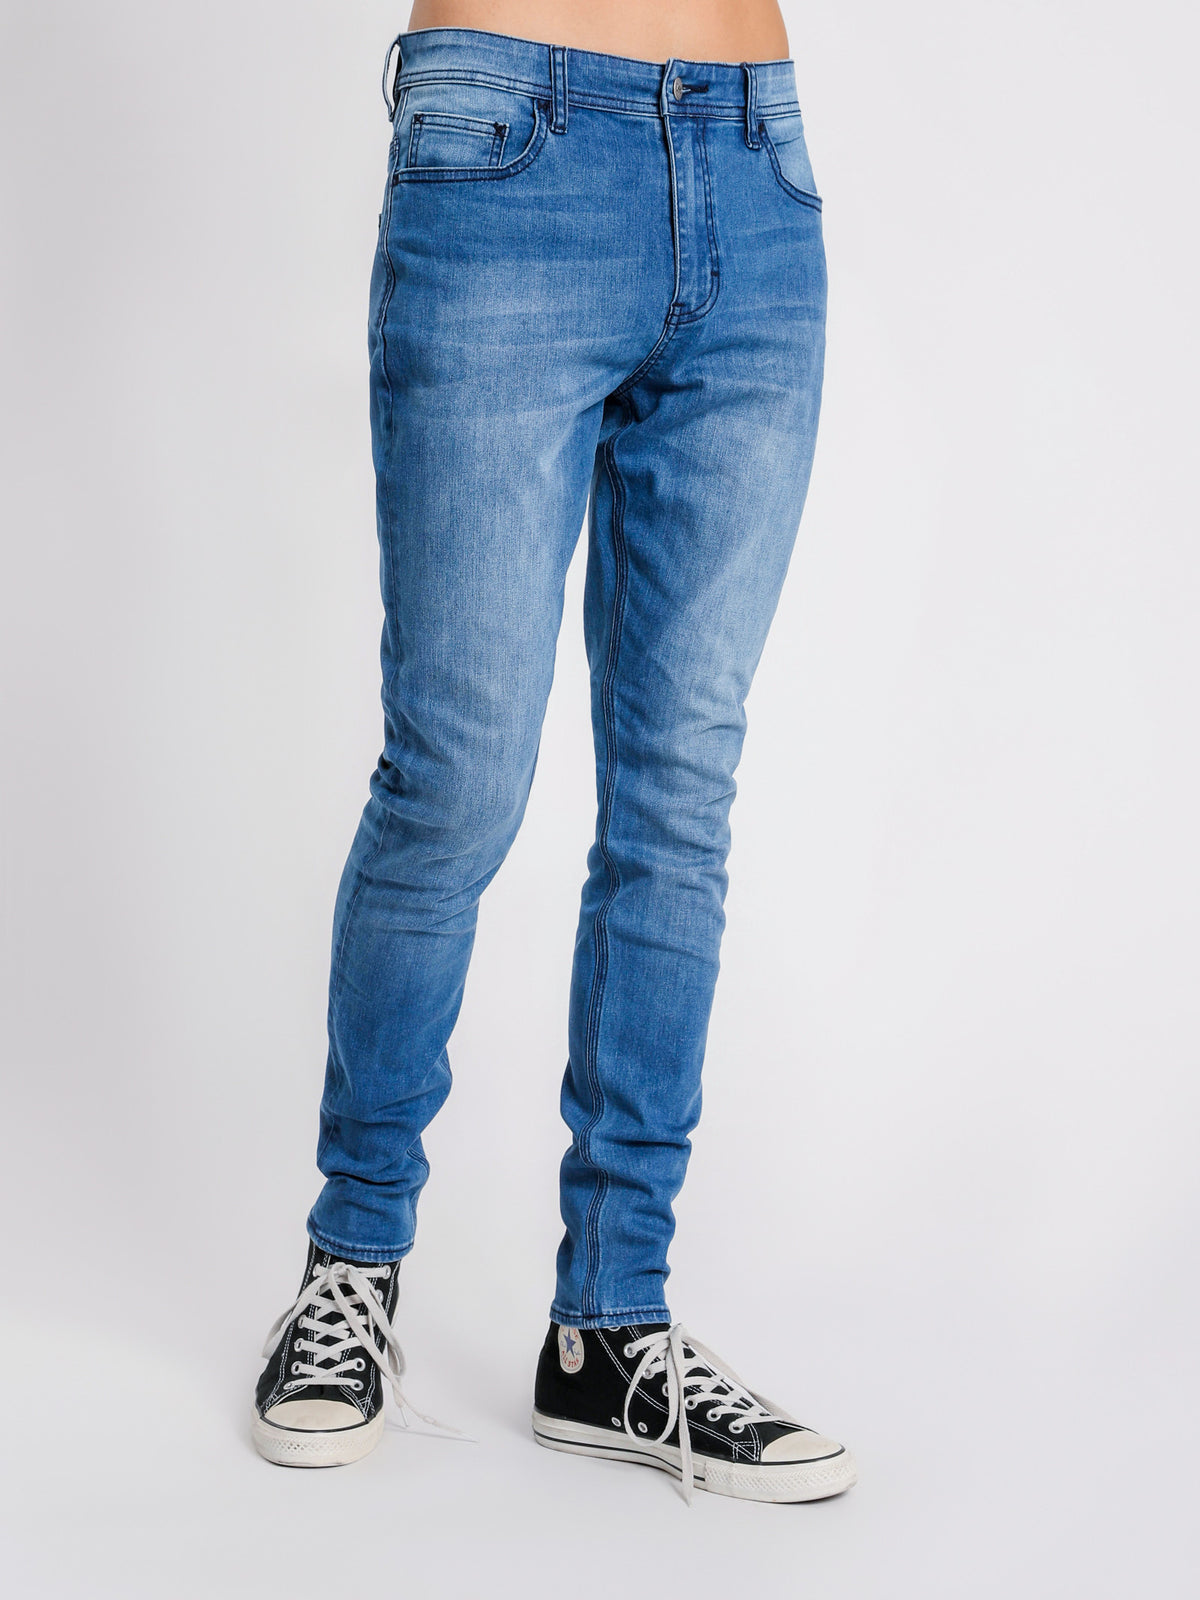 Z-One Jeans in Stellar Blue Denim